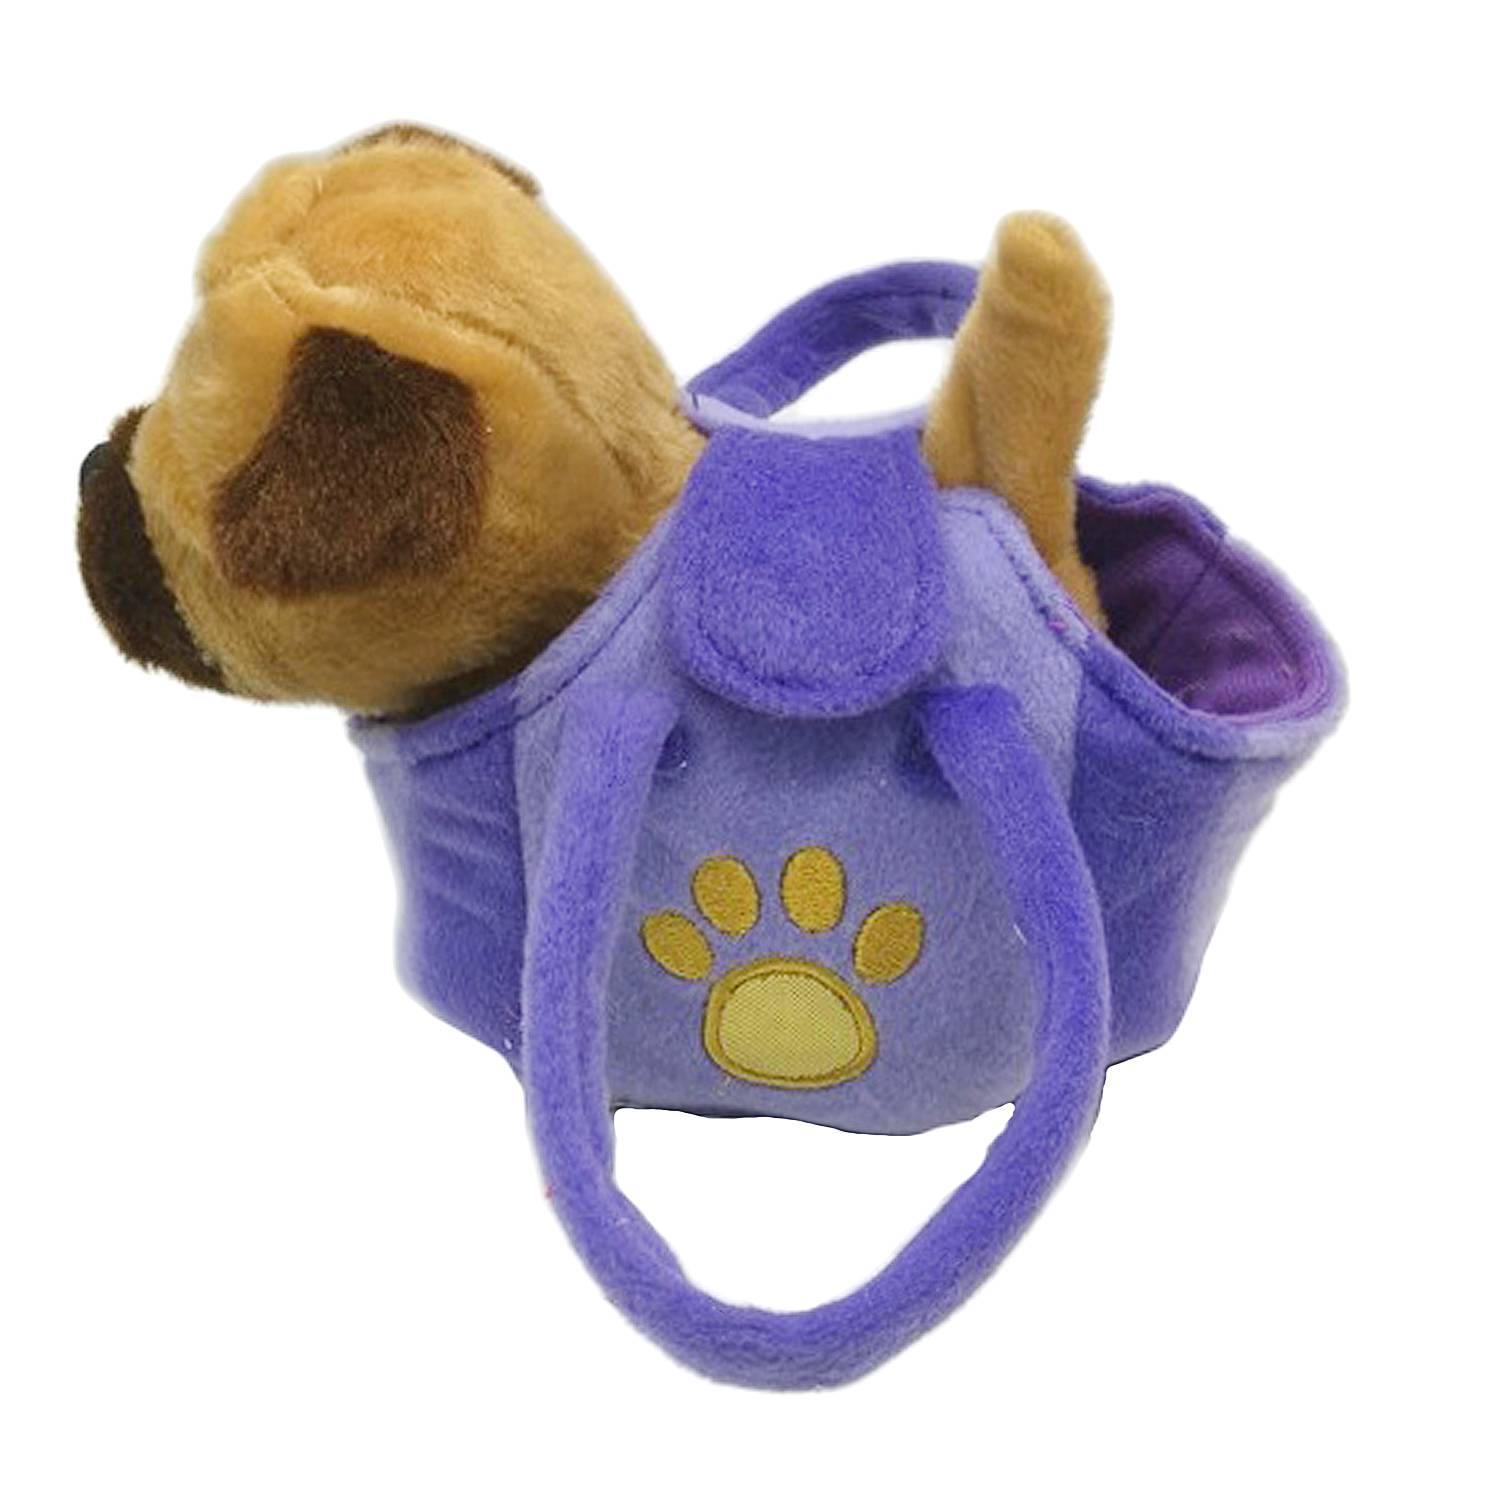 My friends игрушки. Интерактивный щенок в сумочке, озвученный, 17 см. Интерактивный щенок в сумочке. Интерактивный щенок игрушка в сумочке. Мягкая игрушка со звуком.